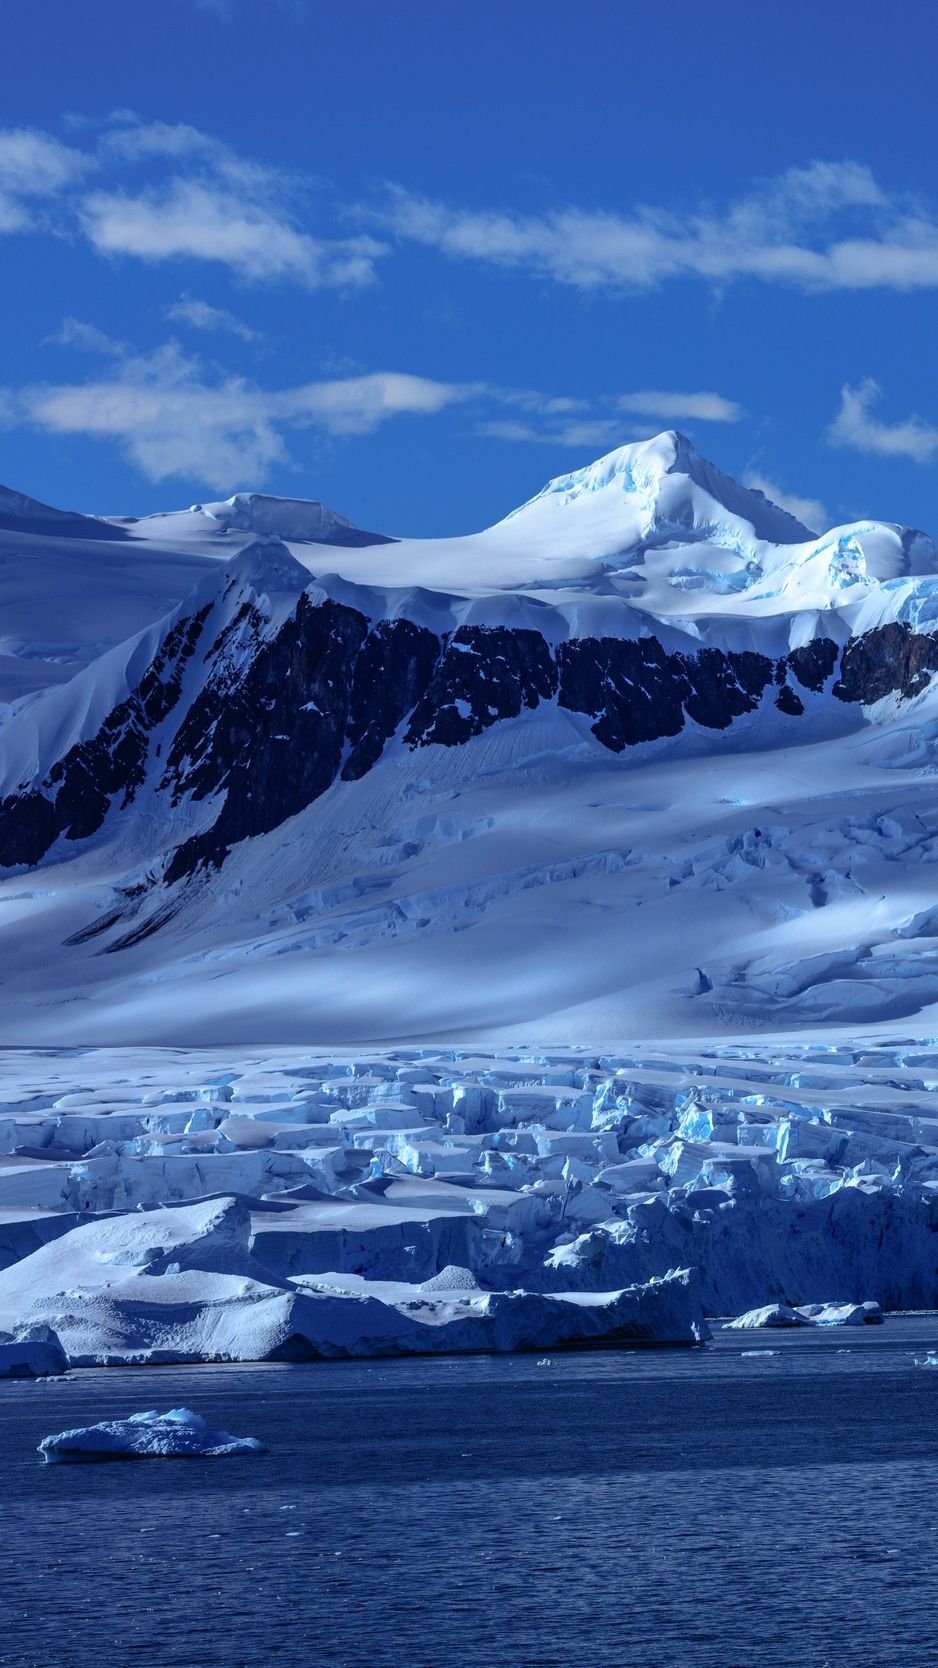 Download wallpaper 938x1668 mountain, snow, snowy, antarctica, bay